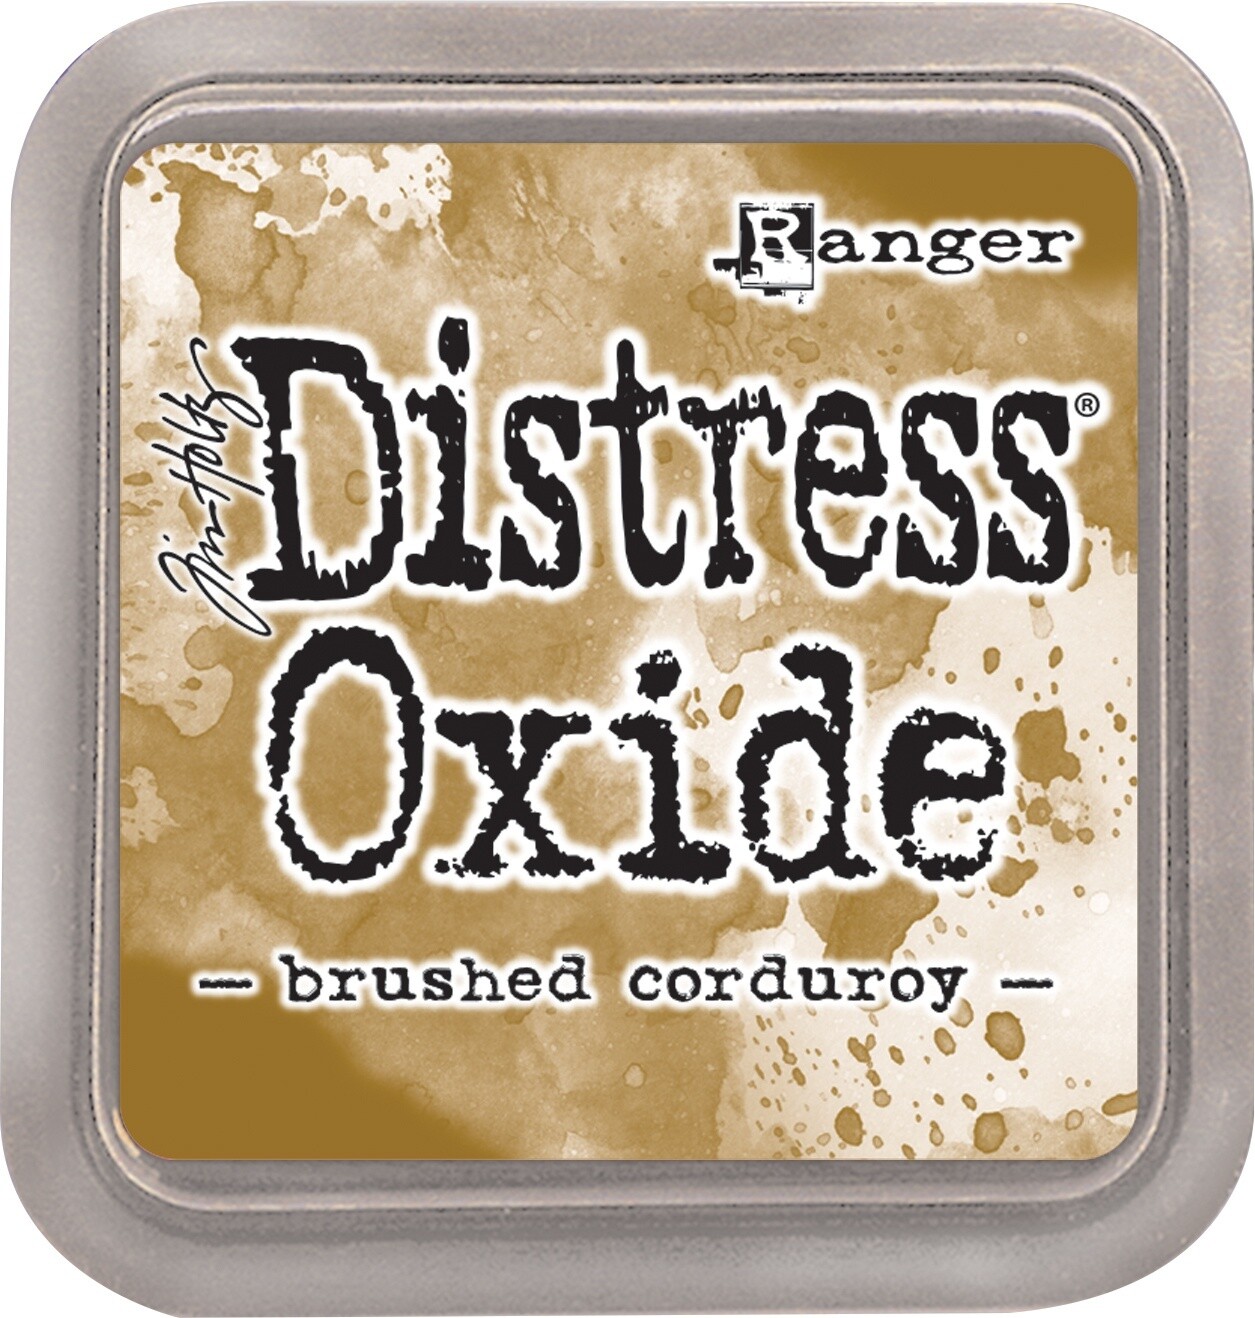 Tim Holtz Distress BRUSHED CORDUROY Oxides Ink Pad